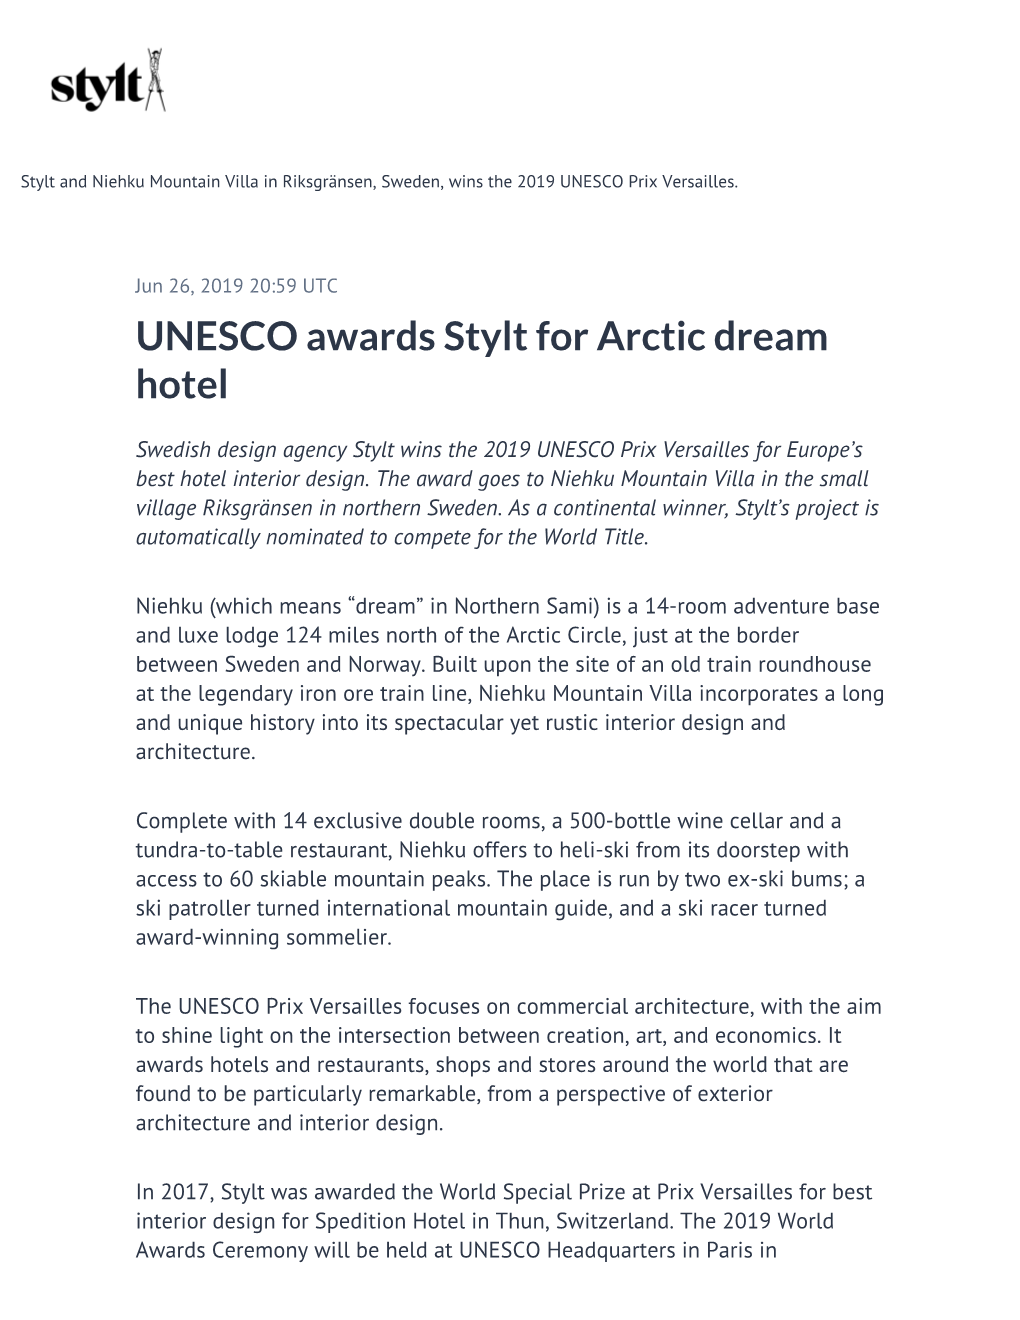 UNESCO Awards Stylt for Arctic Dream Hotel